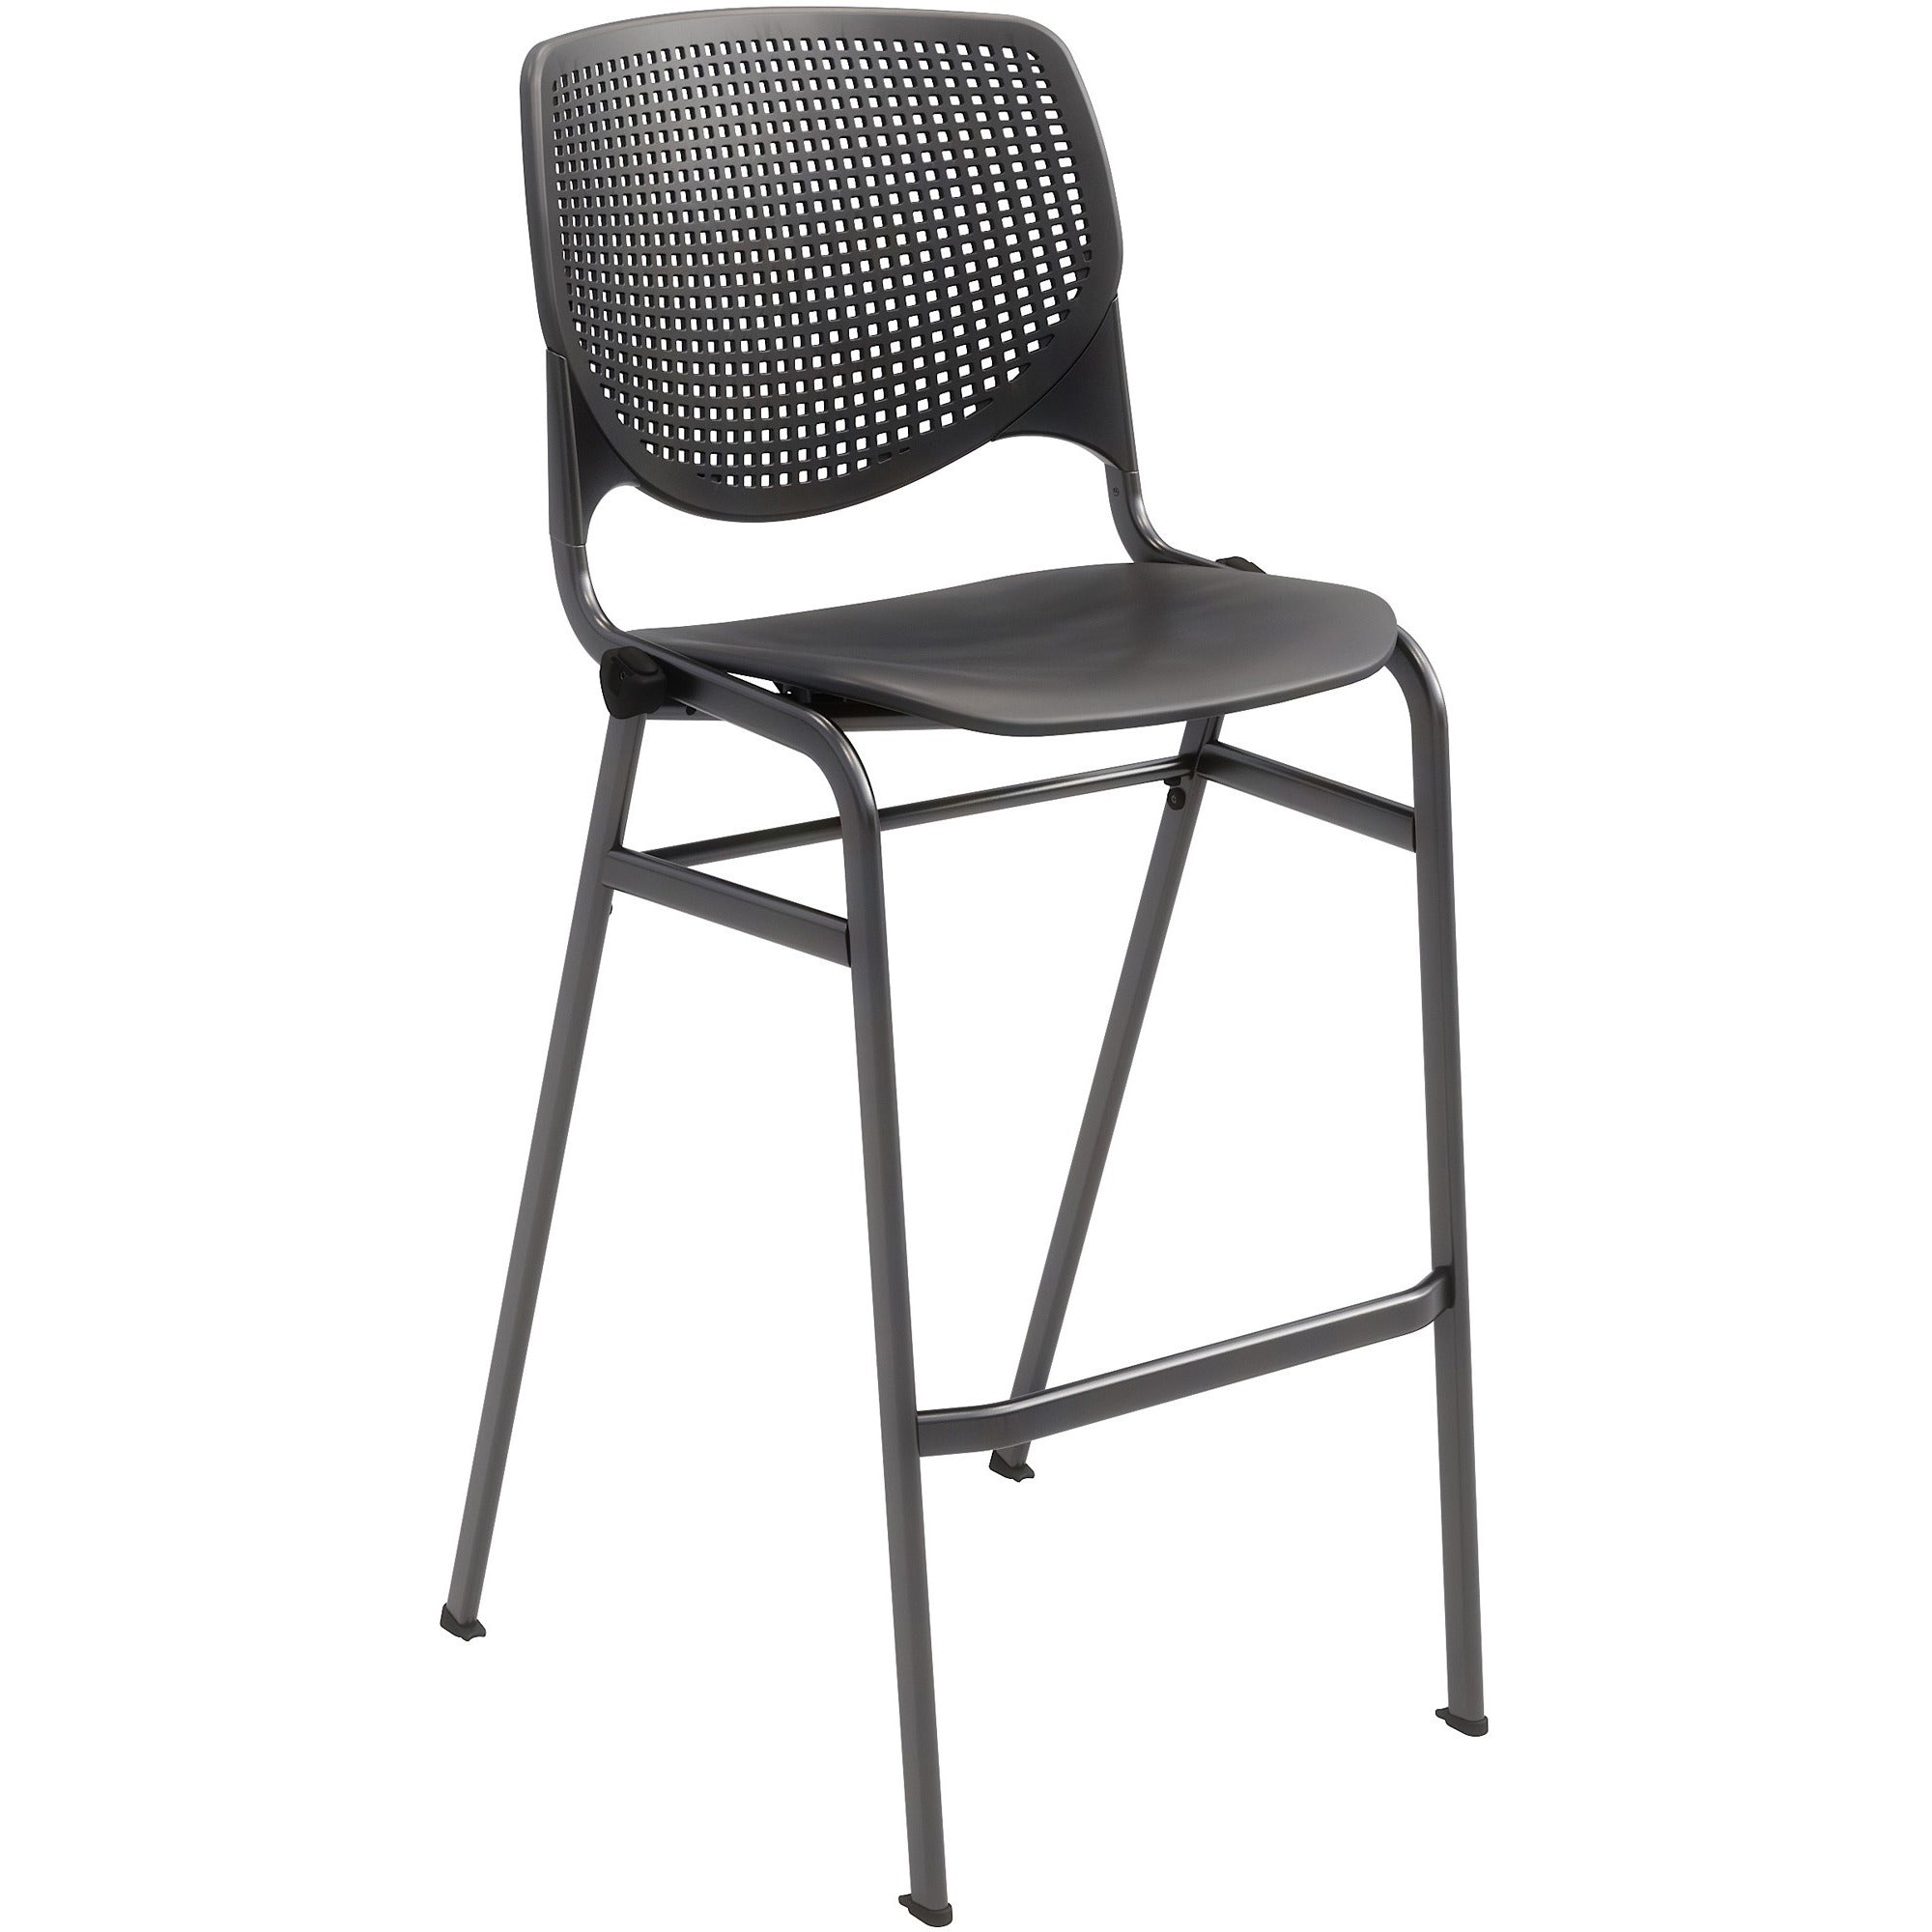 kfi-barstool-chair-black-polypropylene-seat-black-aluminum-alloy-polypropylene-back-black-steel-frame-four-legged-base-1-each_kfibr2300bkp10 - 1